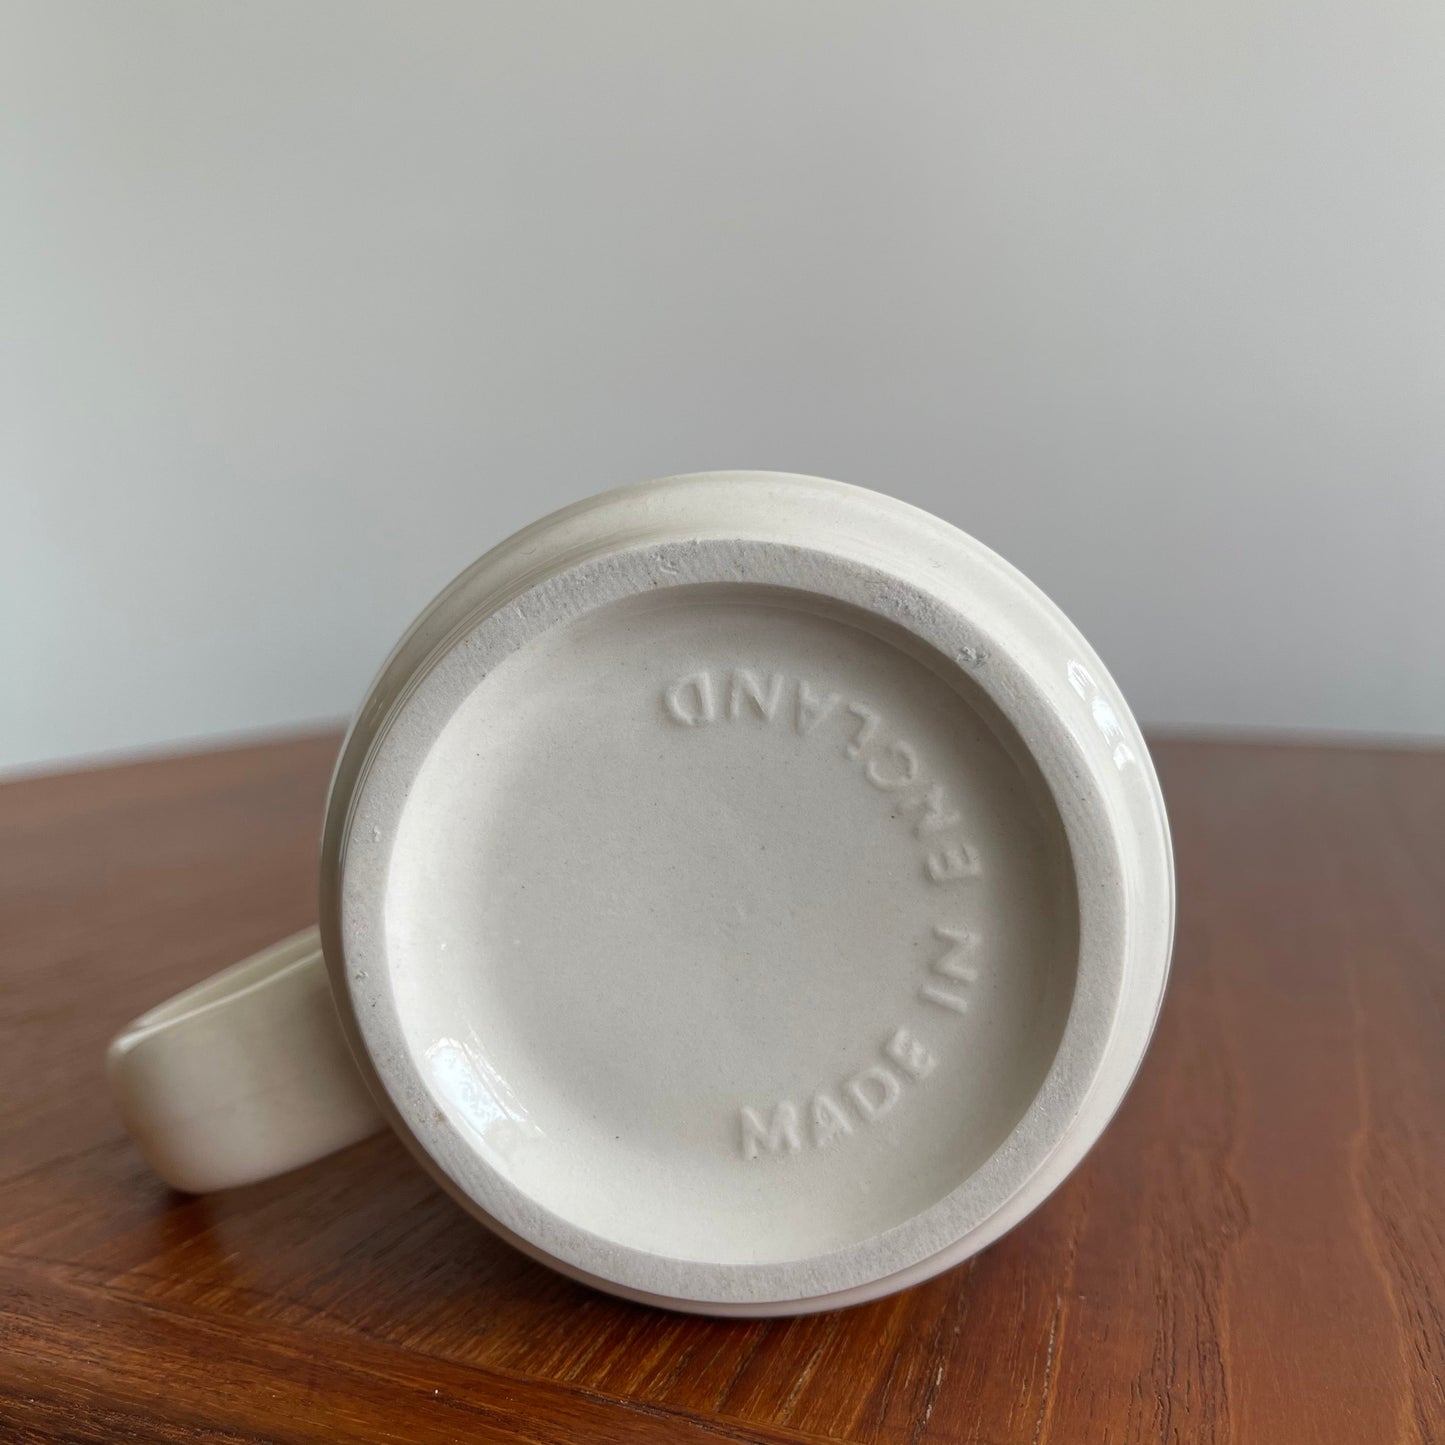 Vintage “Class of 89” Ceramic Mug